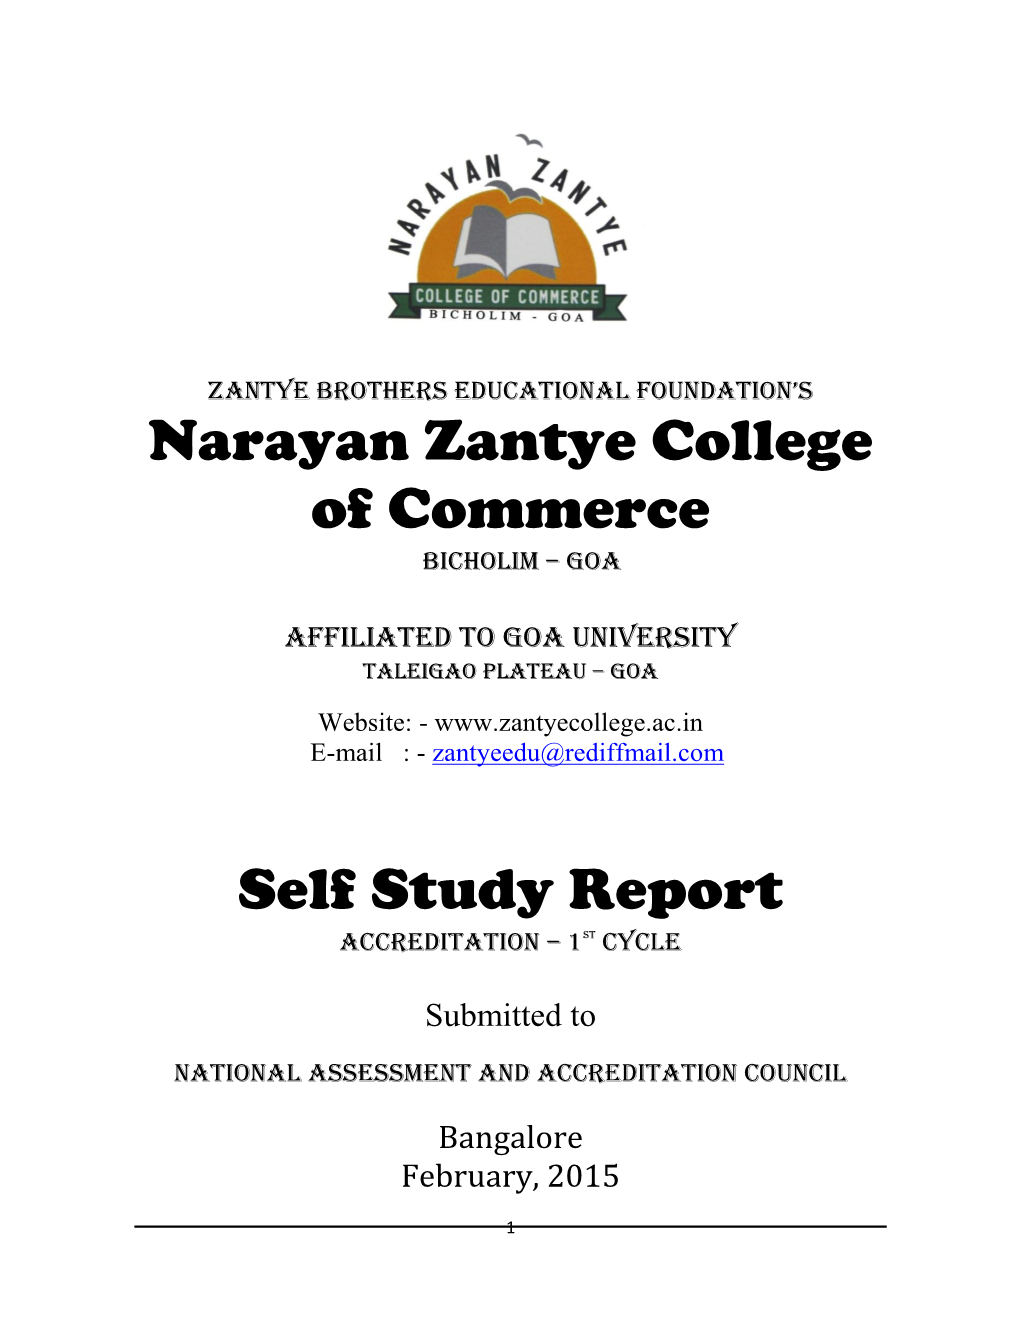 Narayan Zantye College of Commerce Self Study Report